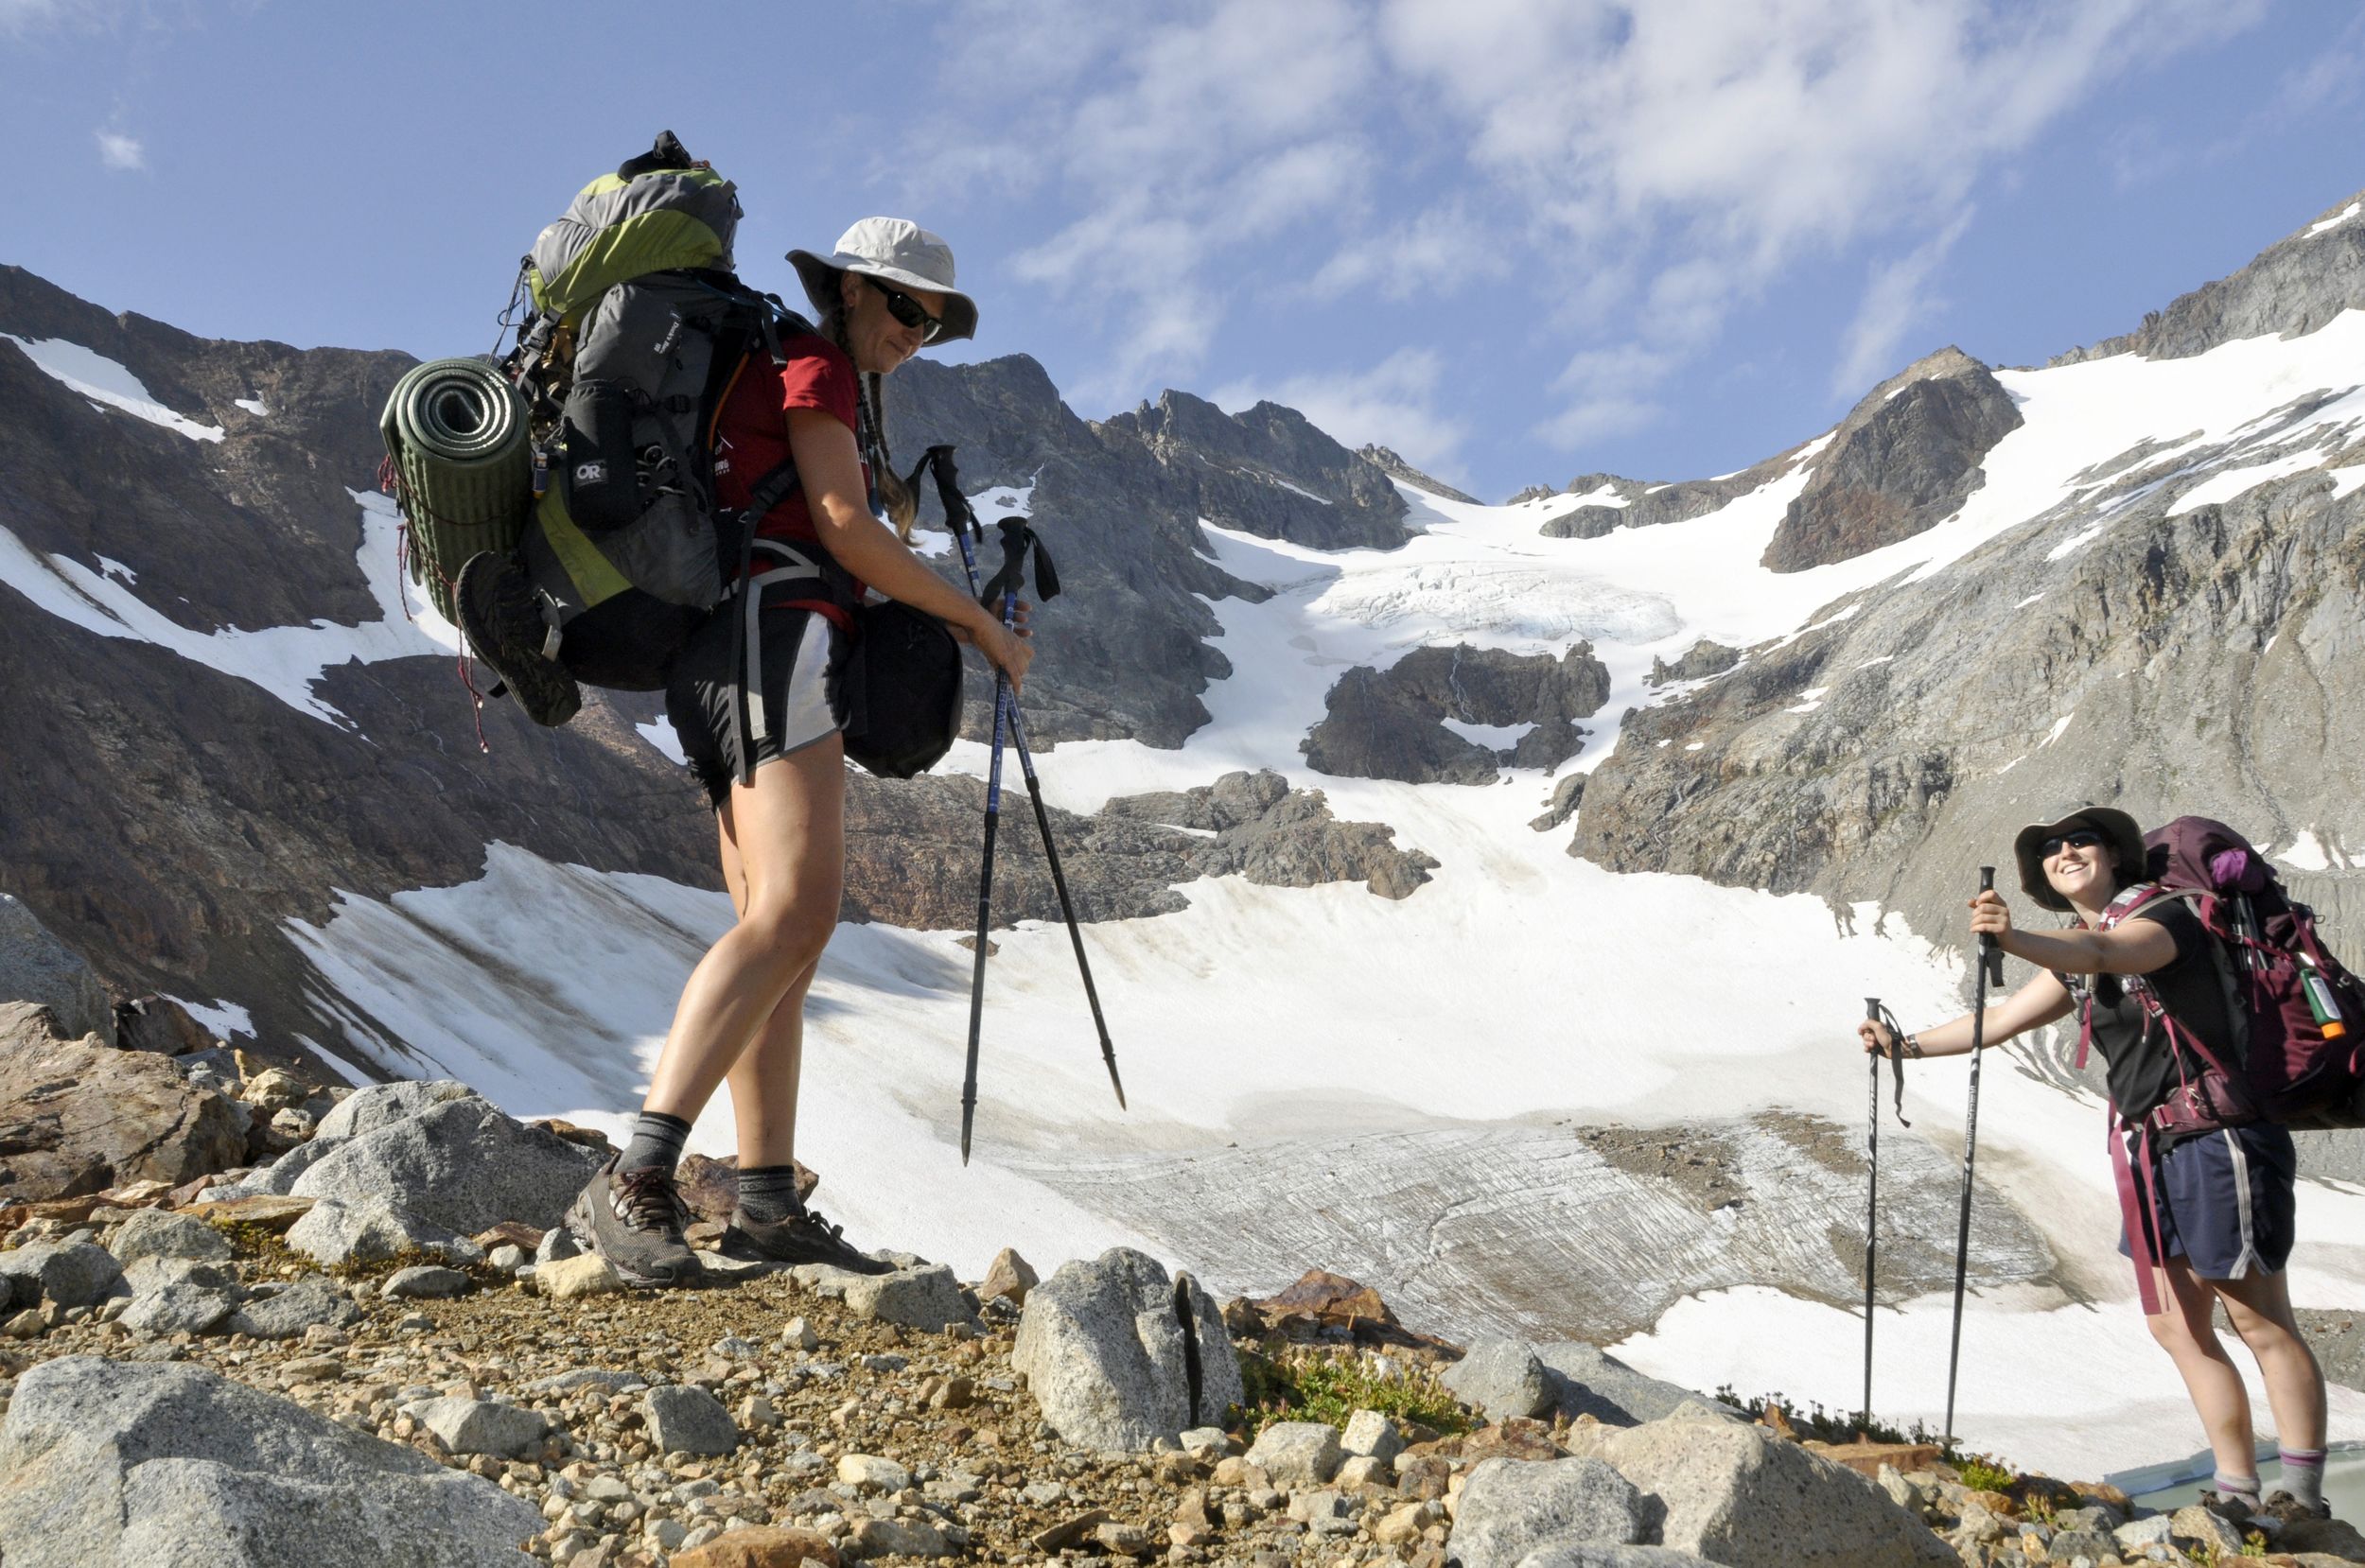 Glacier Peak Wilderness hikers find nature untamed near hidden